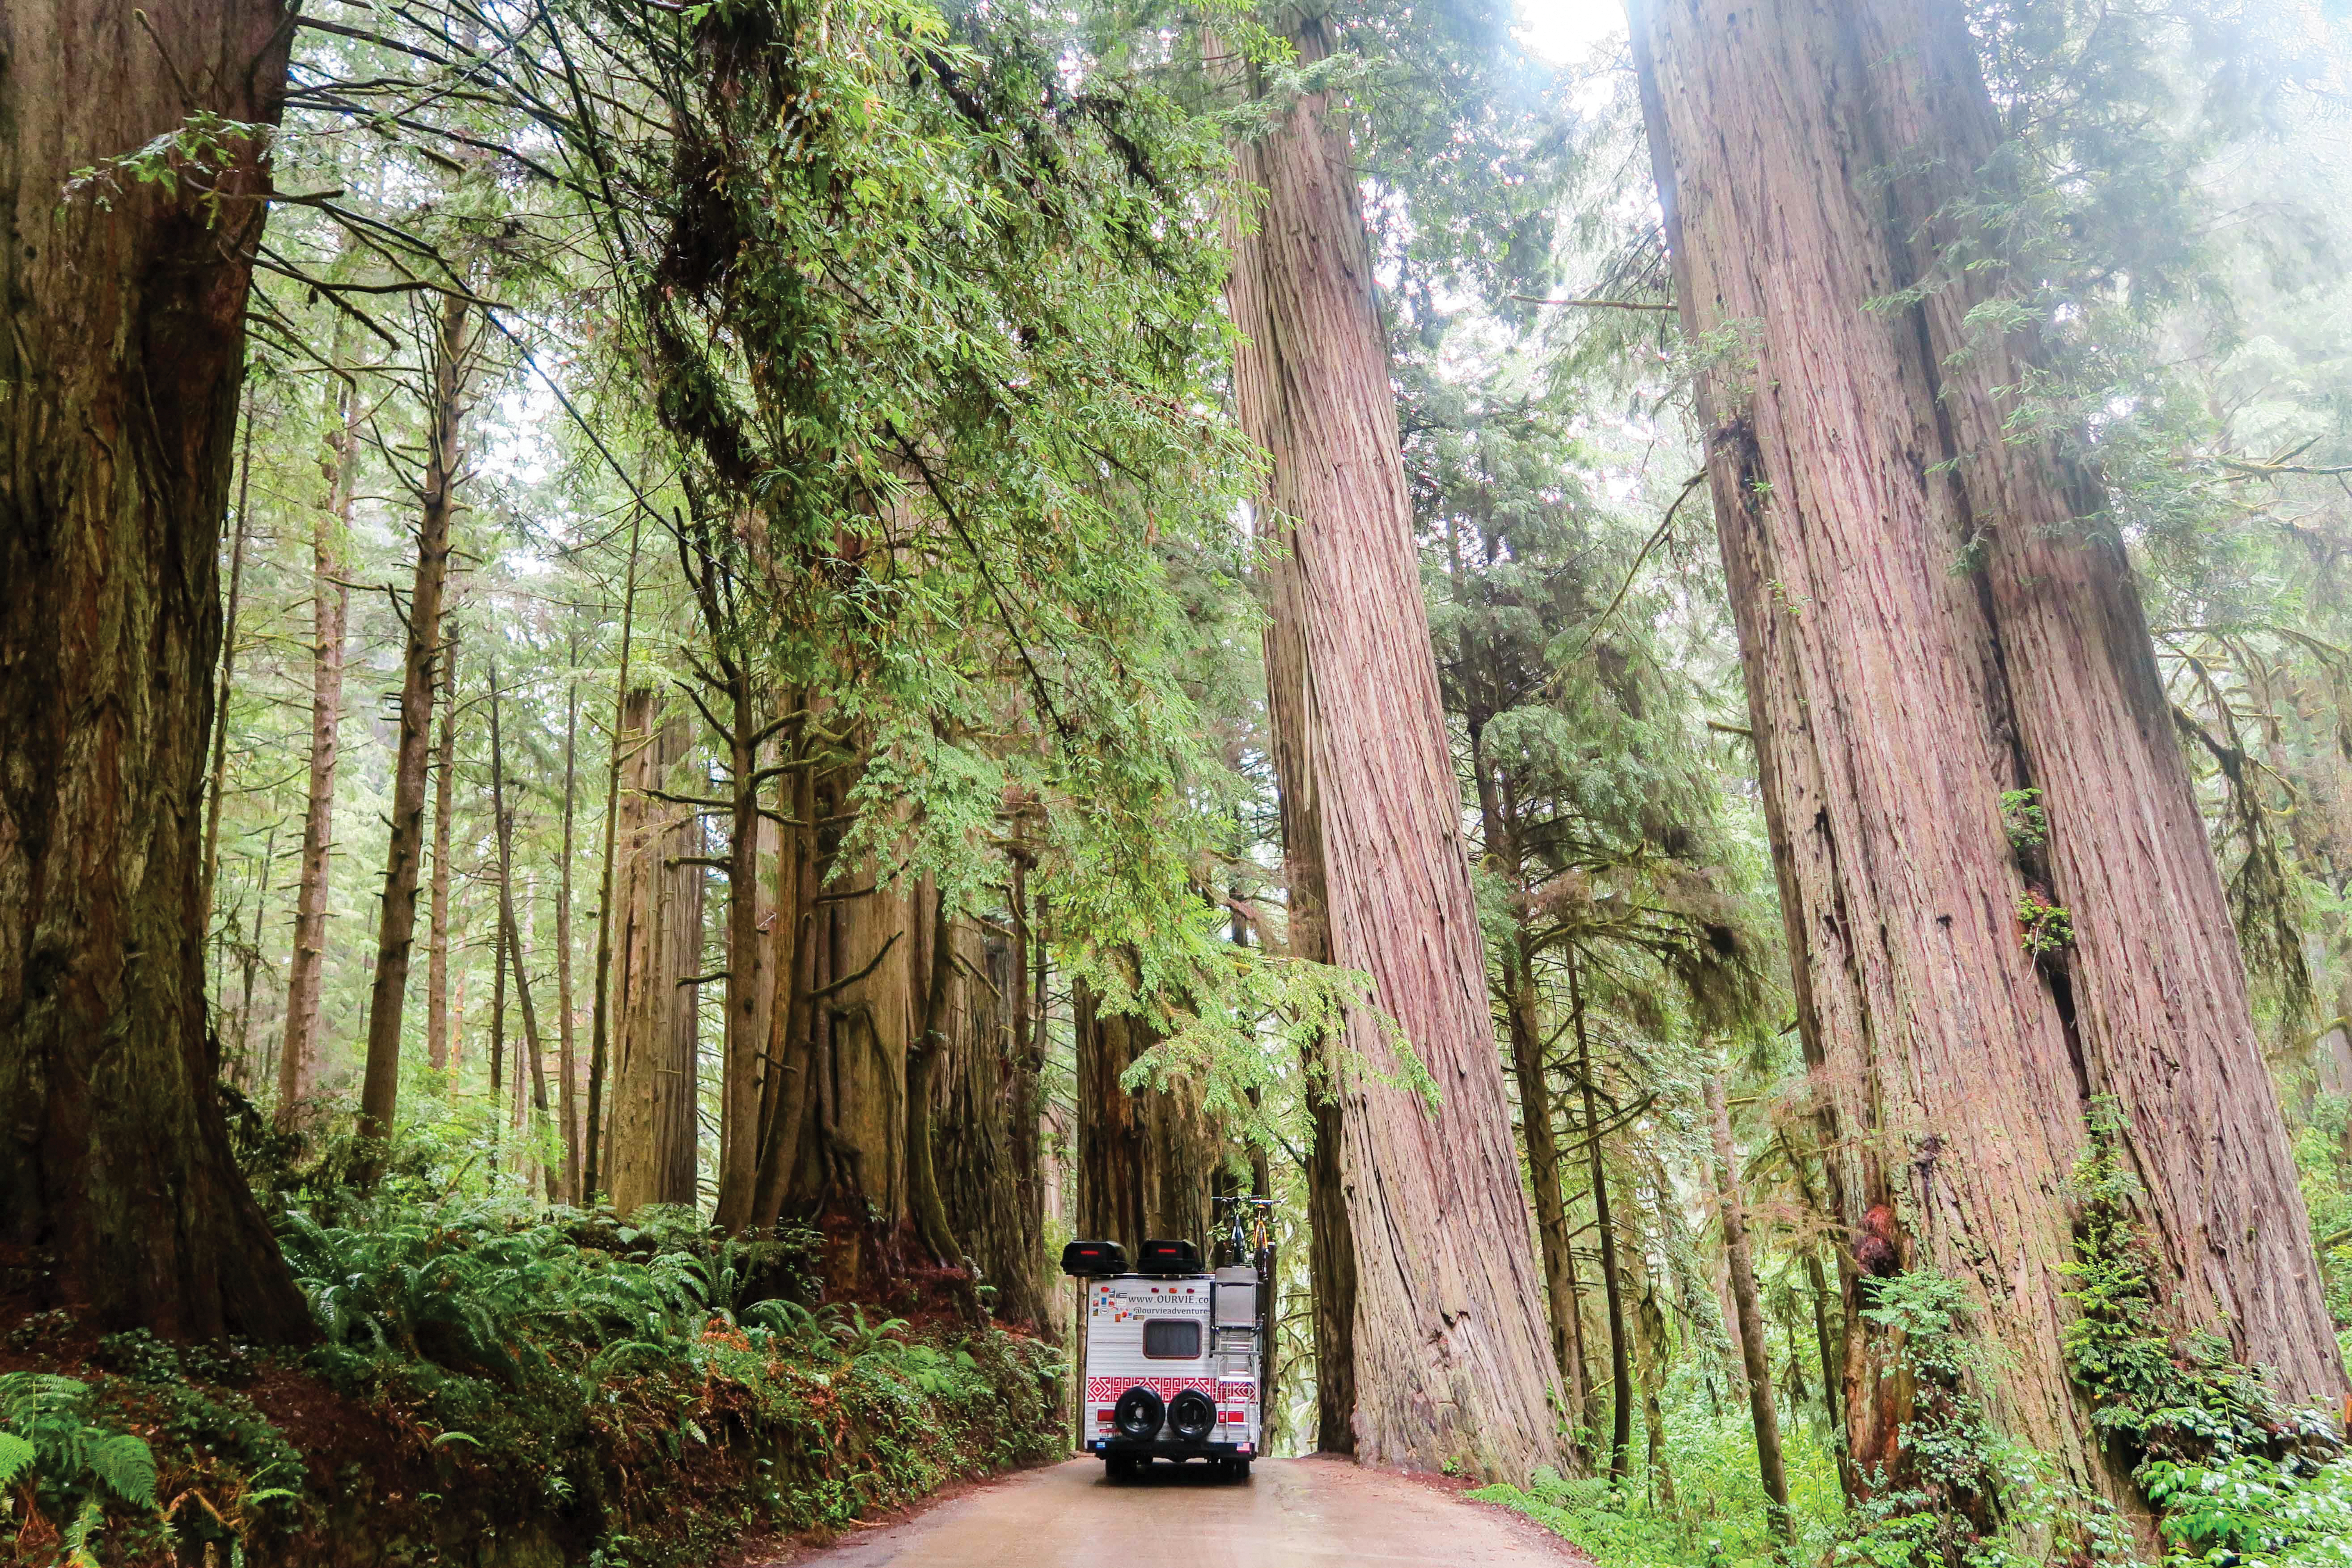 The Hofmans driving through redwoods.